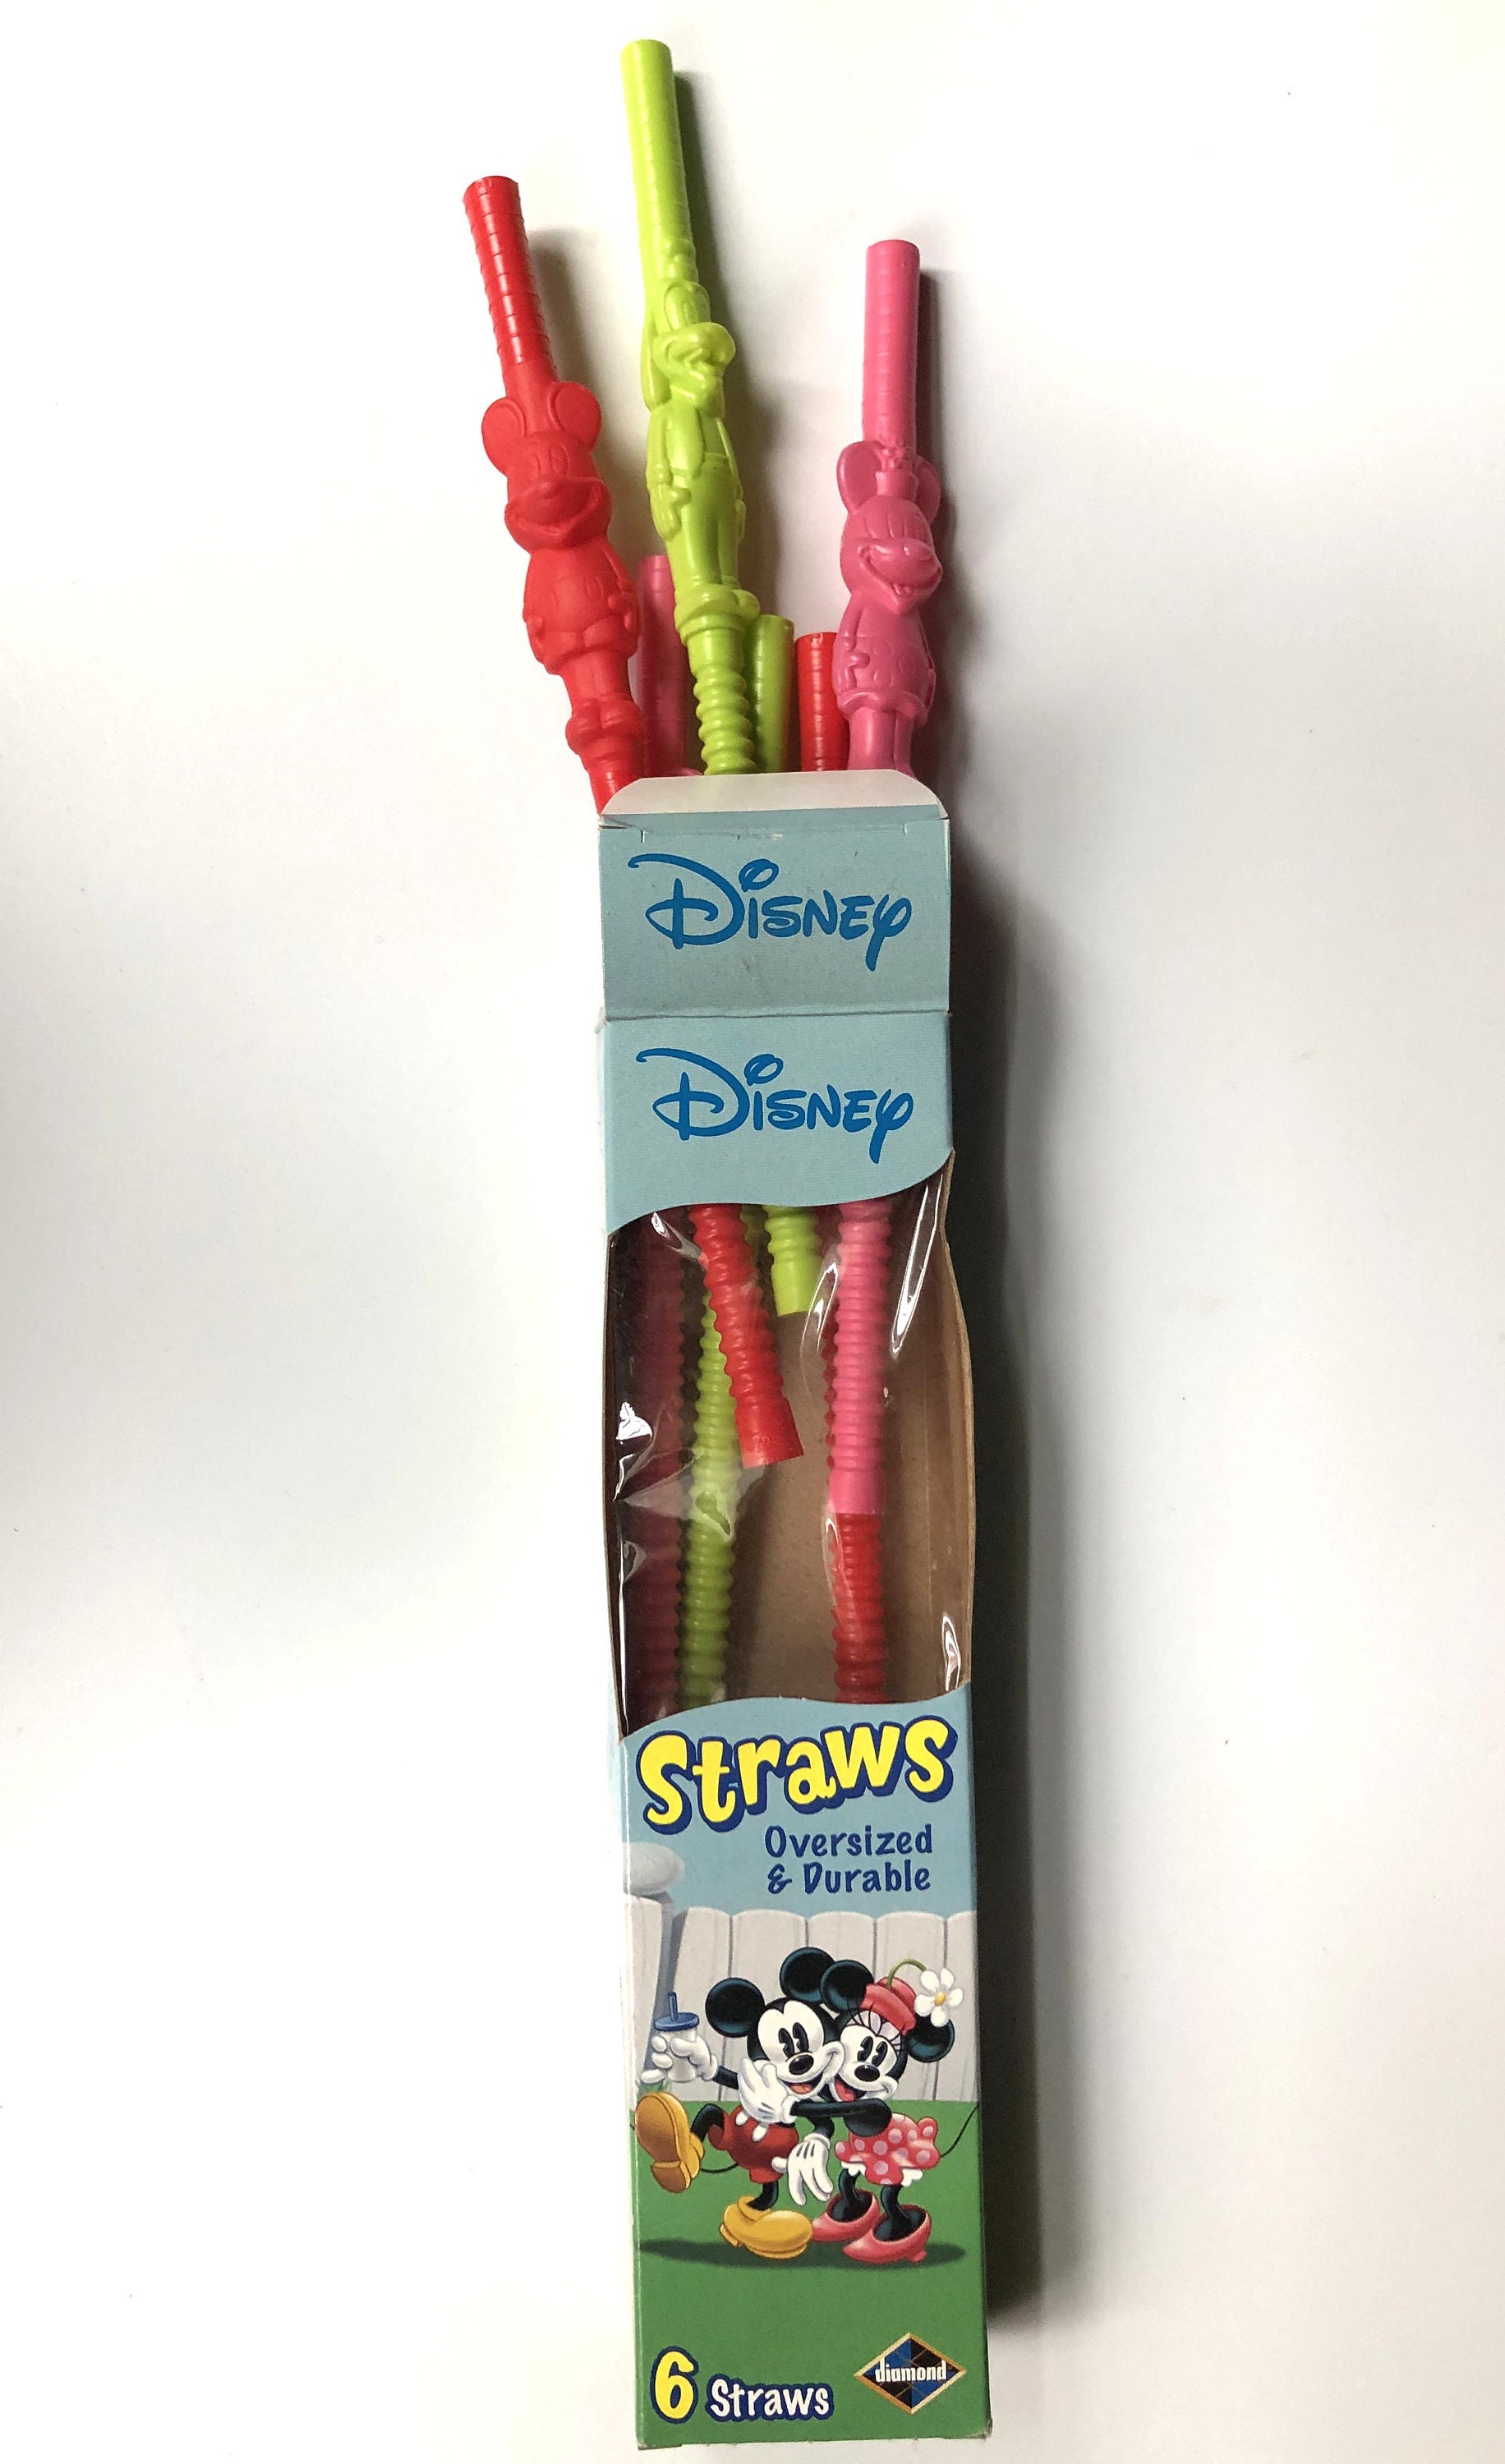 New Disney Reusable Oversized & Durable Straws by Diamond - 6 straws